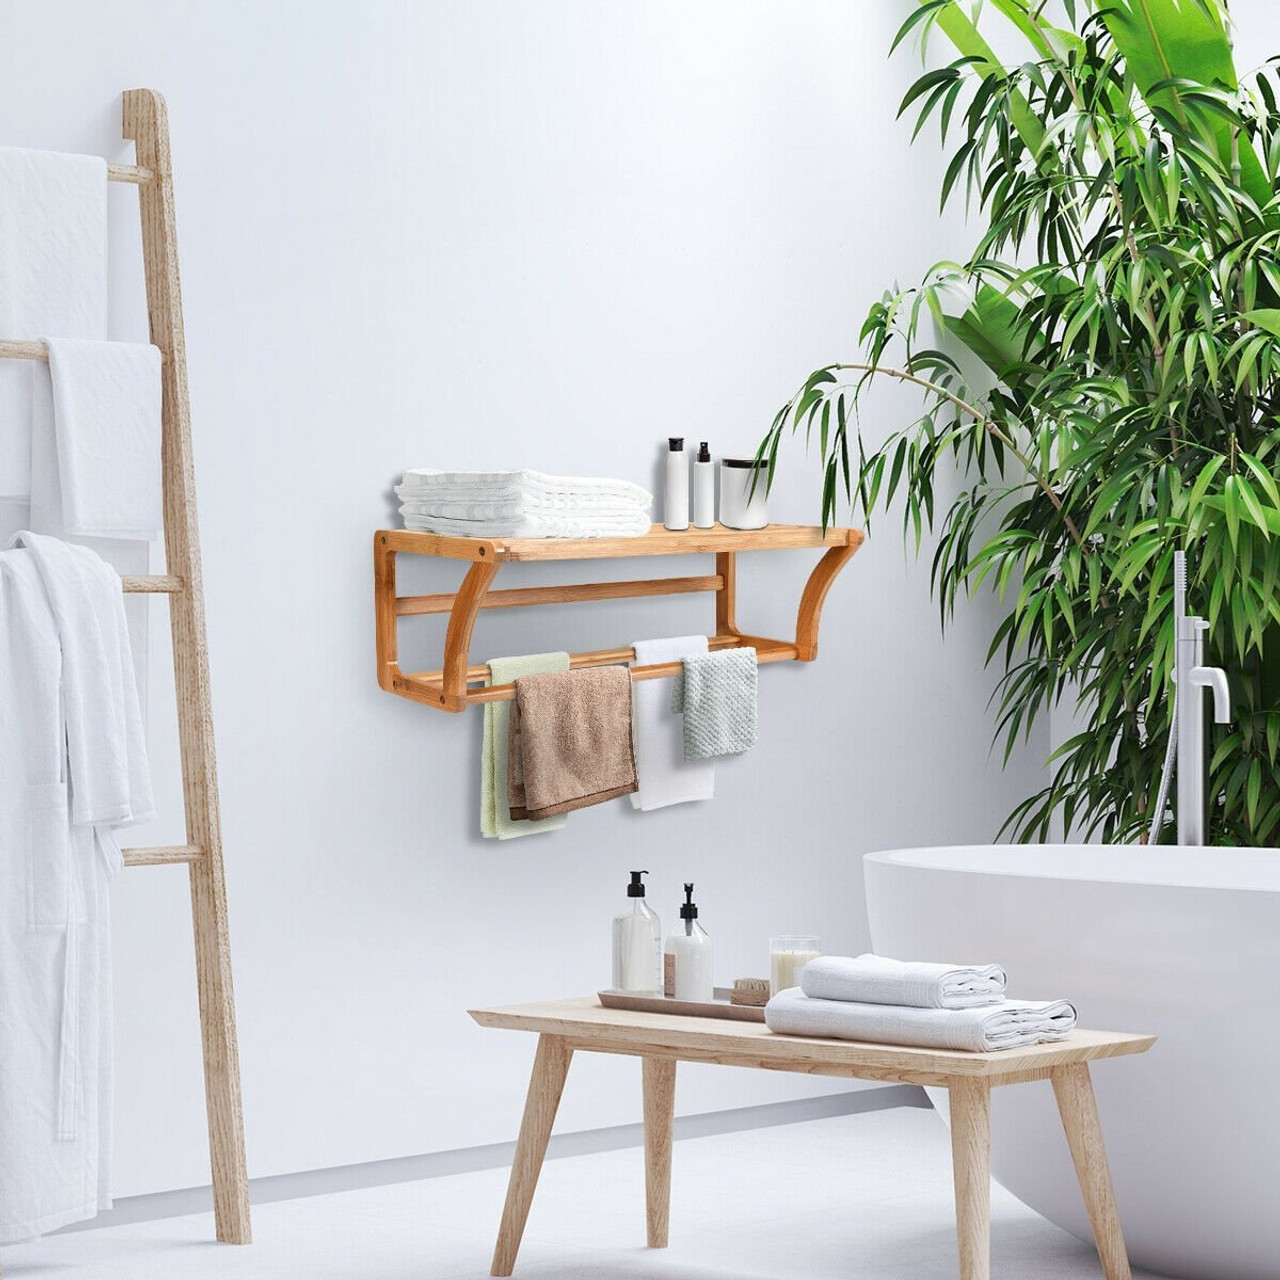 Bamboo Towel Bar Wall Mounted Storage Towel Rack Bathroom Shelf Hw61674 By Cw